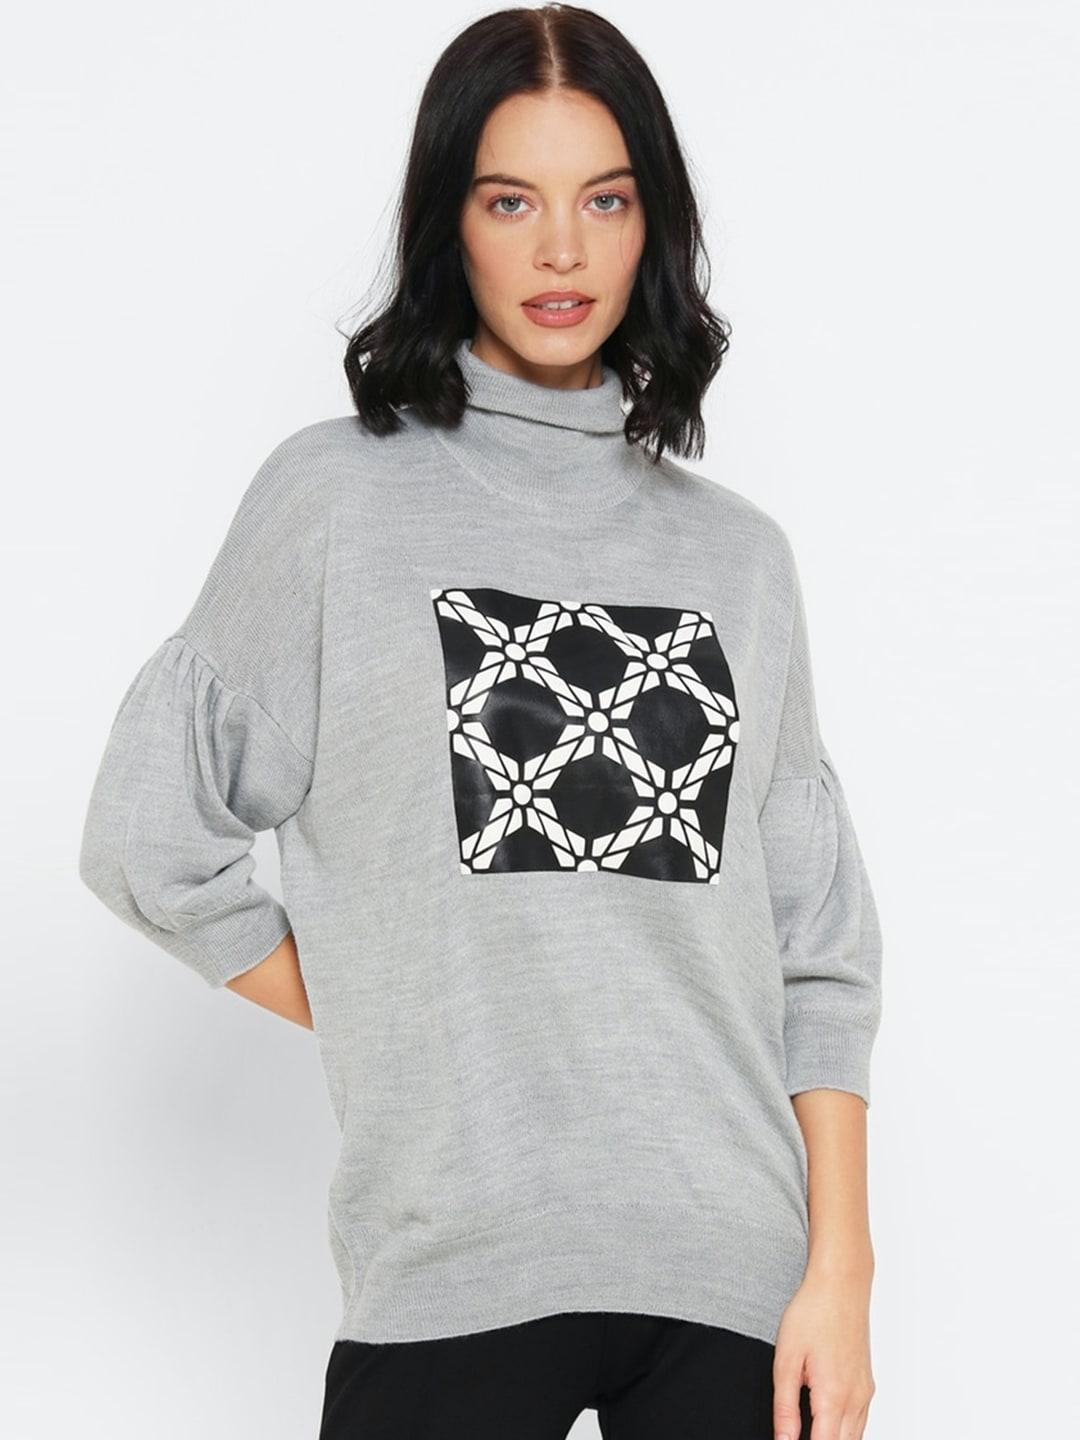 forever-21-women-grey-melange-printed-pullover-sweater